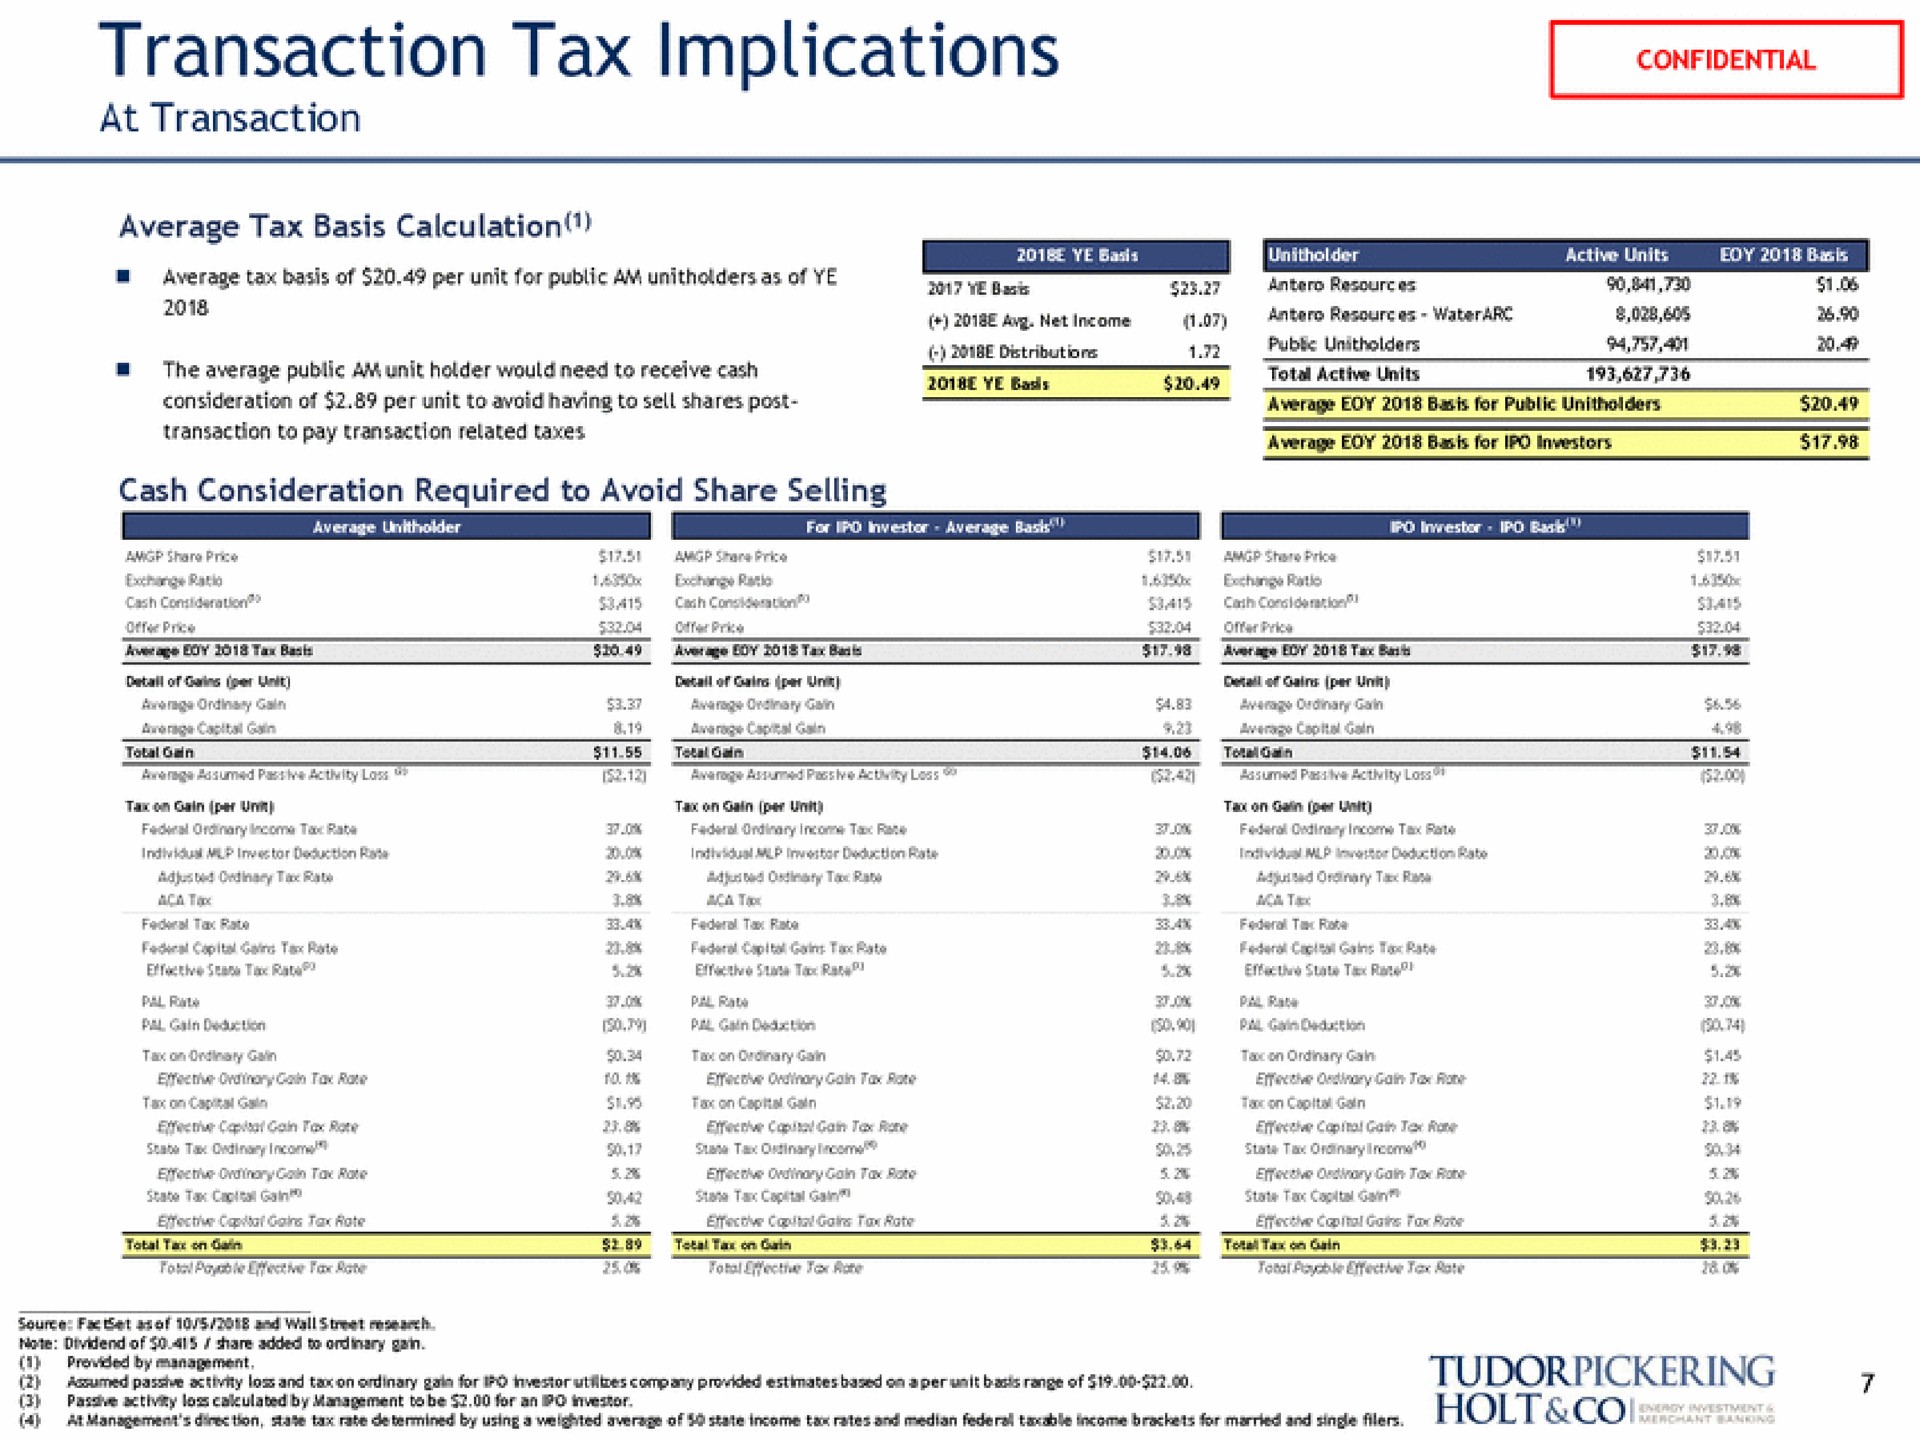 transaction tax implications | Tudor, Pickering, Holt & Co